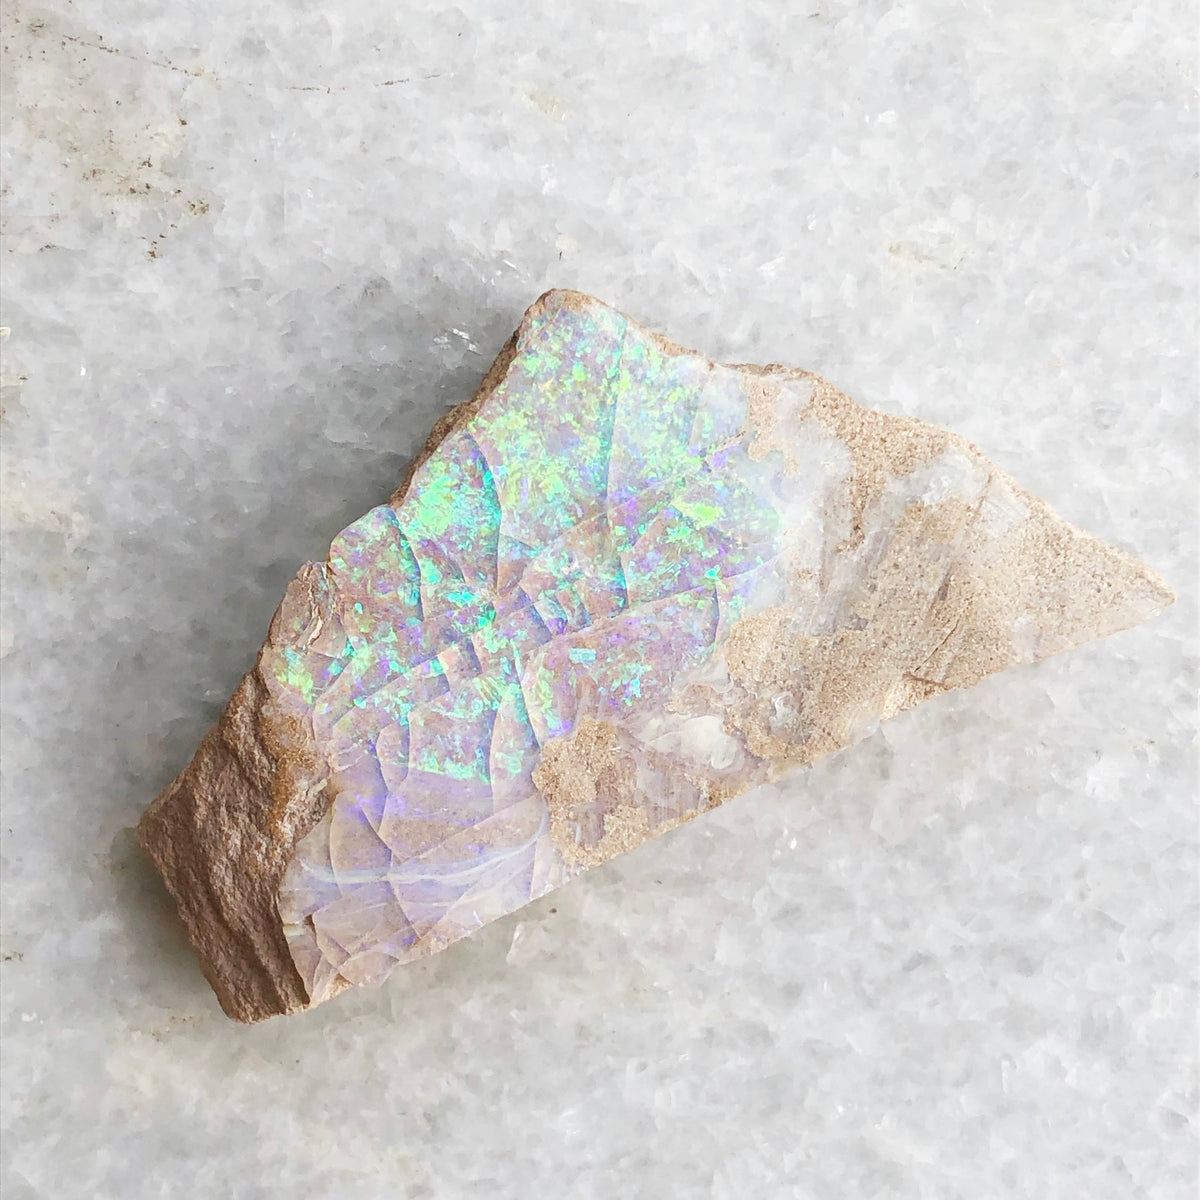 Australian Opal Matrix